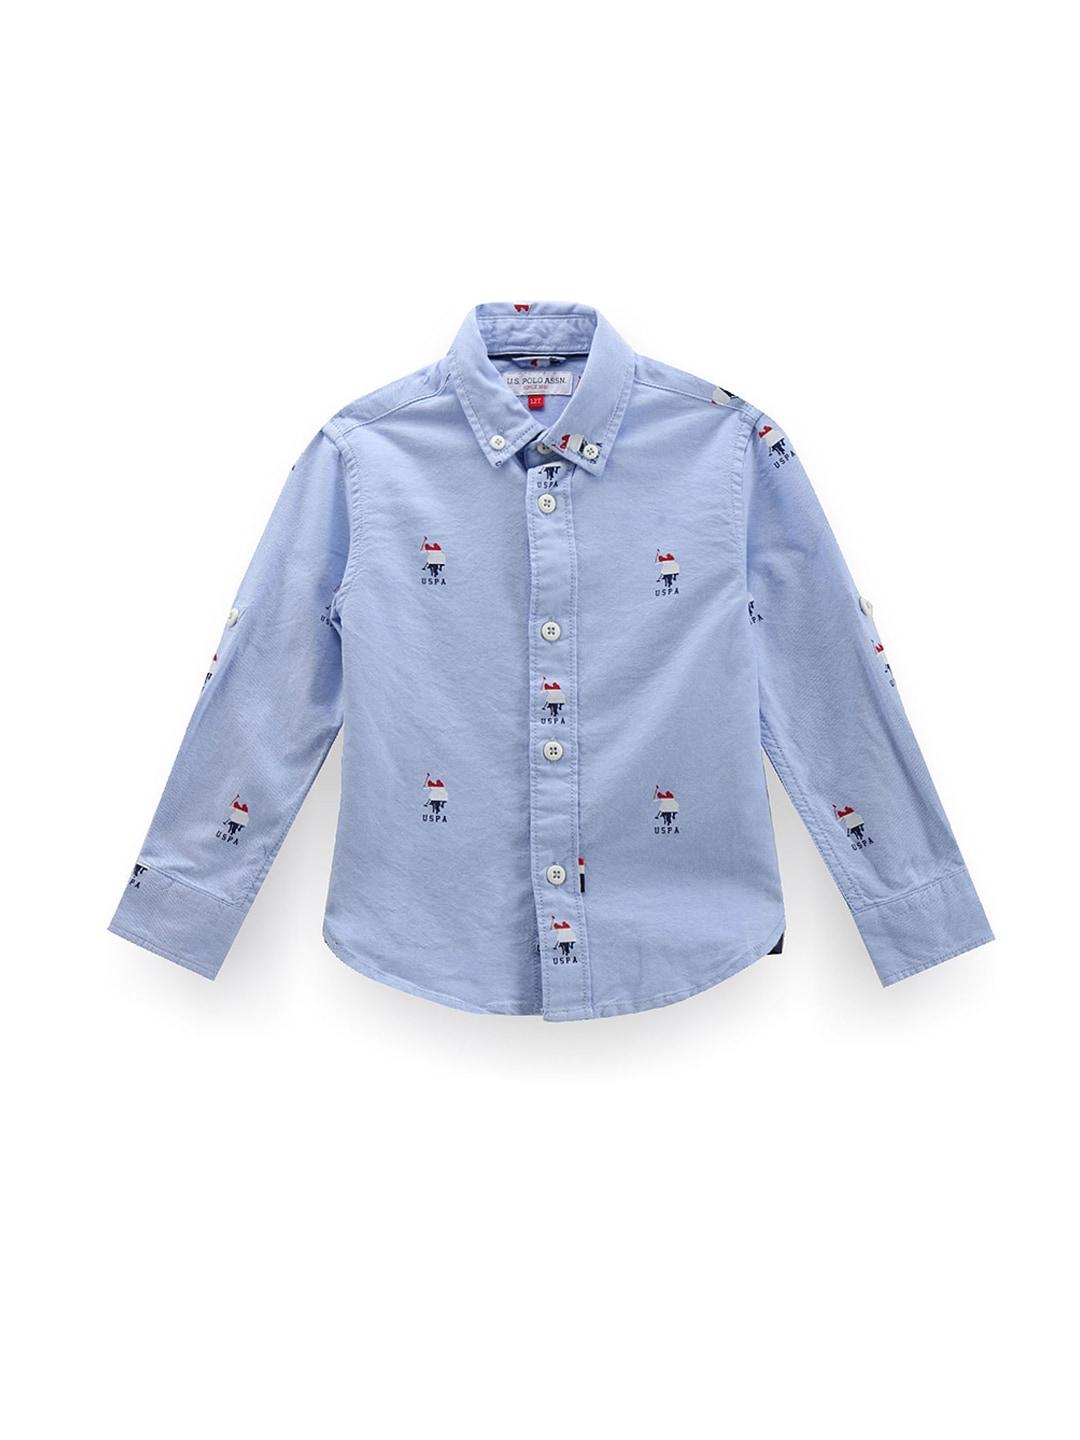 U.S. Polo Assn. Kids Boys Classic Brand Printed Oxford Long Sleeves Cotton Casual Shirt